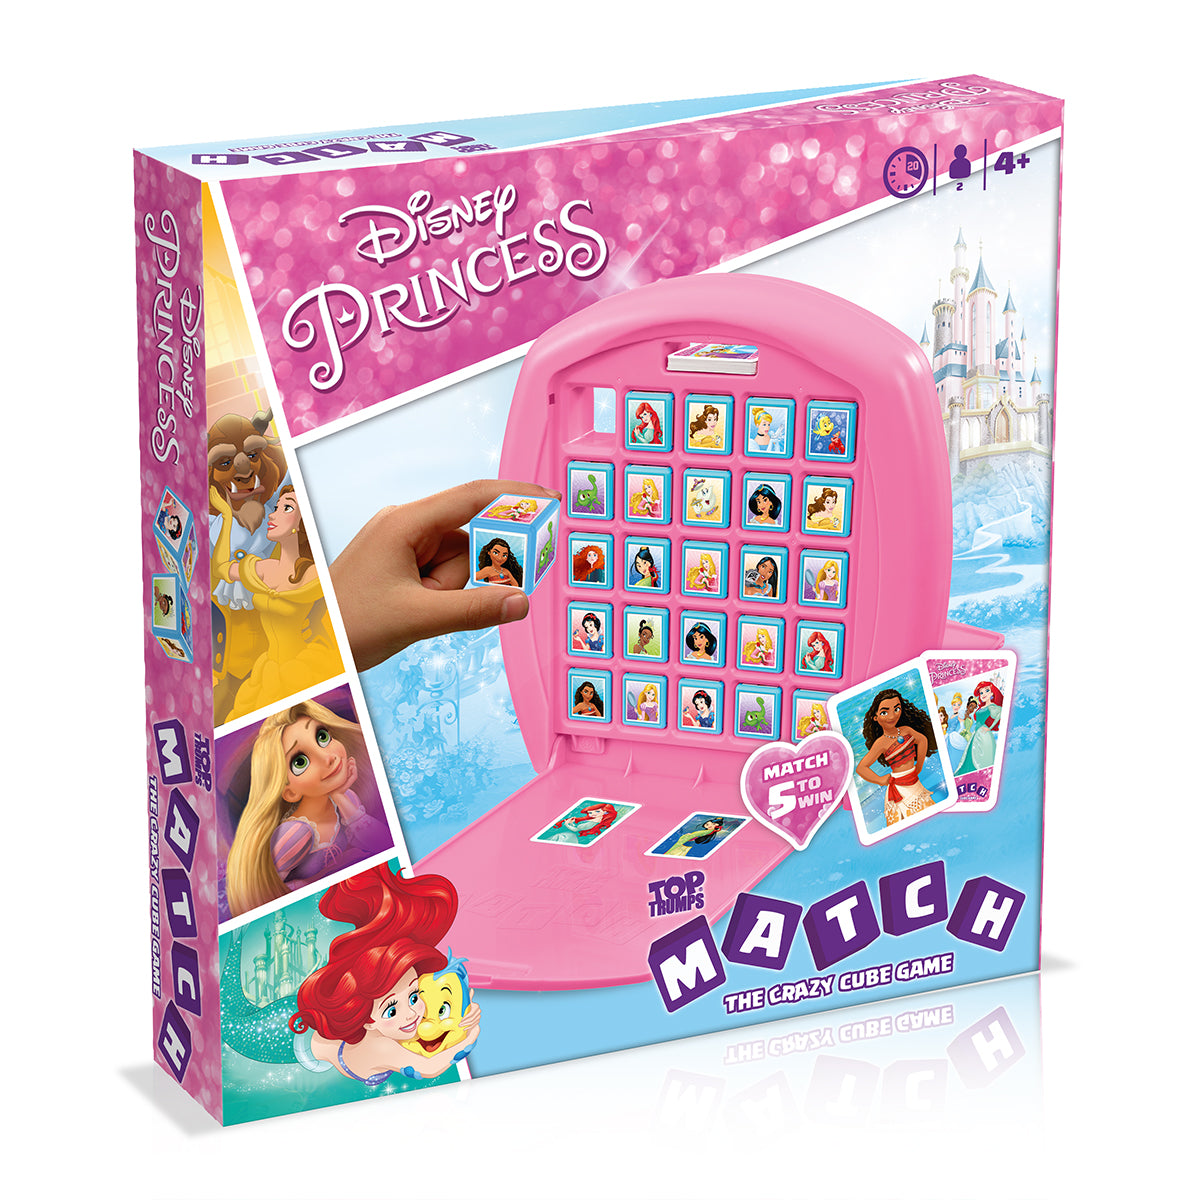 Disney Princess Top Trumps Match - The Crazy Cube Game